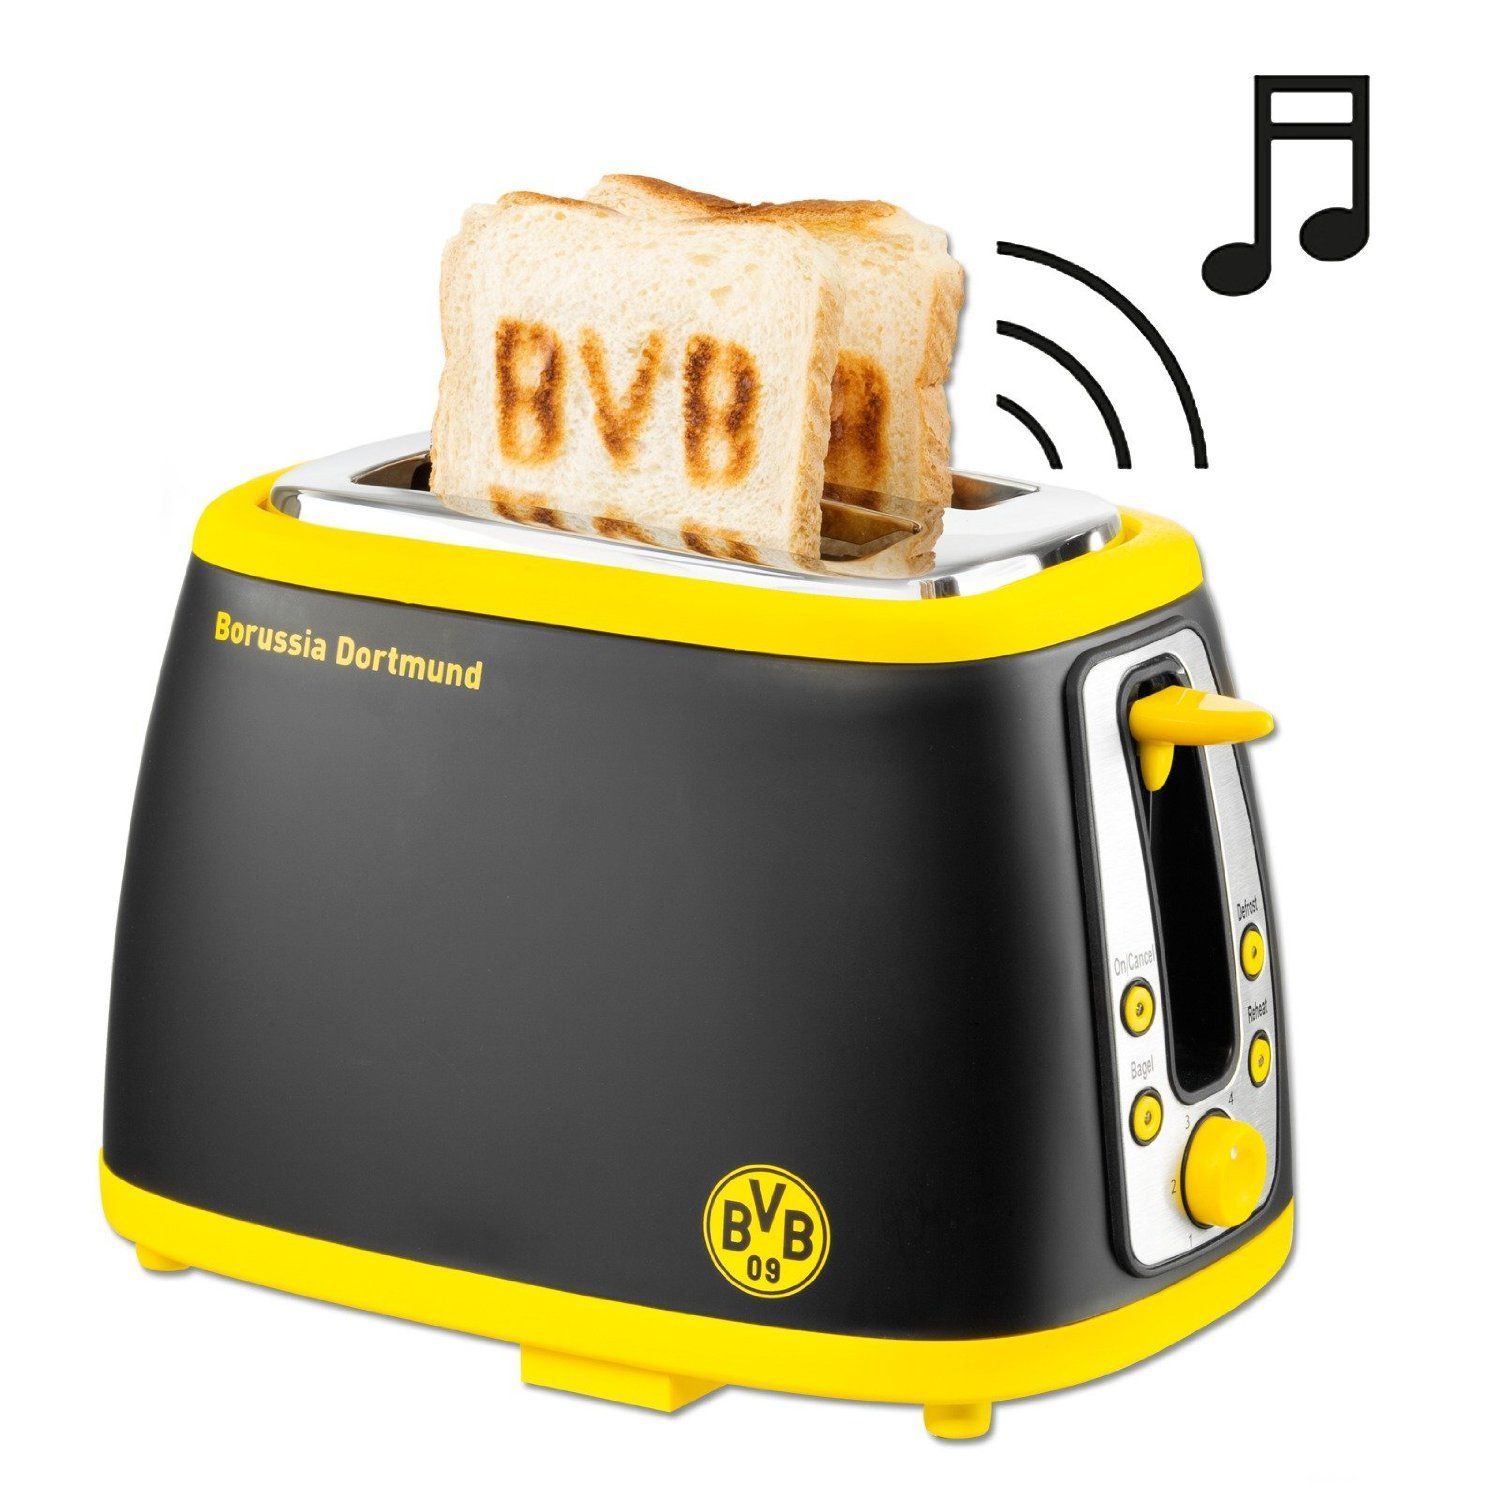 BVB Borussia Dortmund Sound - Toaster  Neu